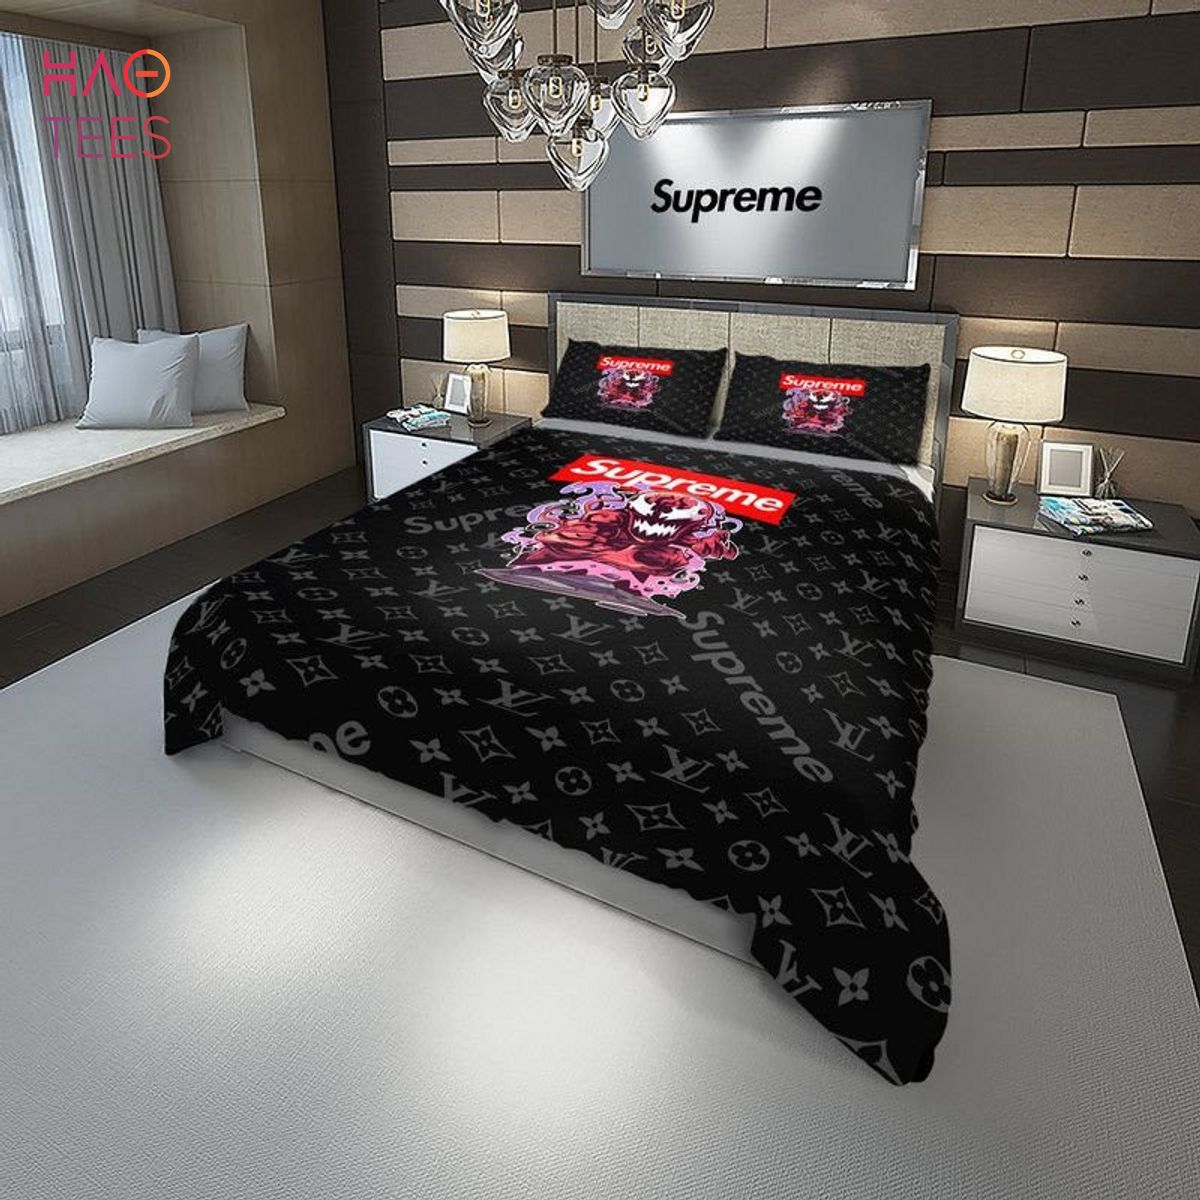 Supreme Bape Black Luxury Brand Bedding Set Duvet Cover Home Decor